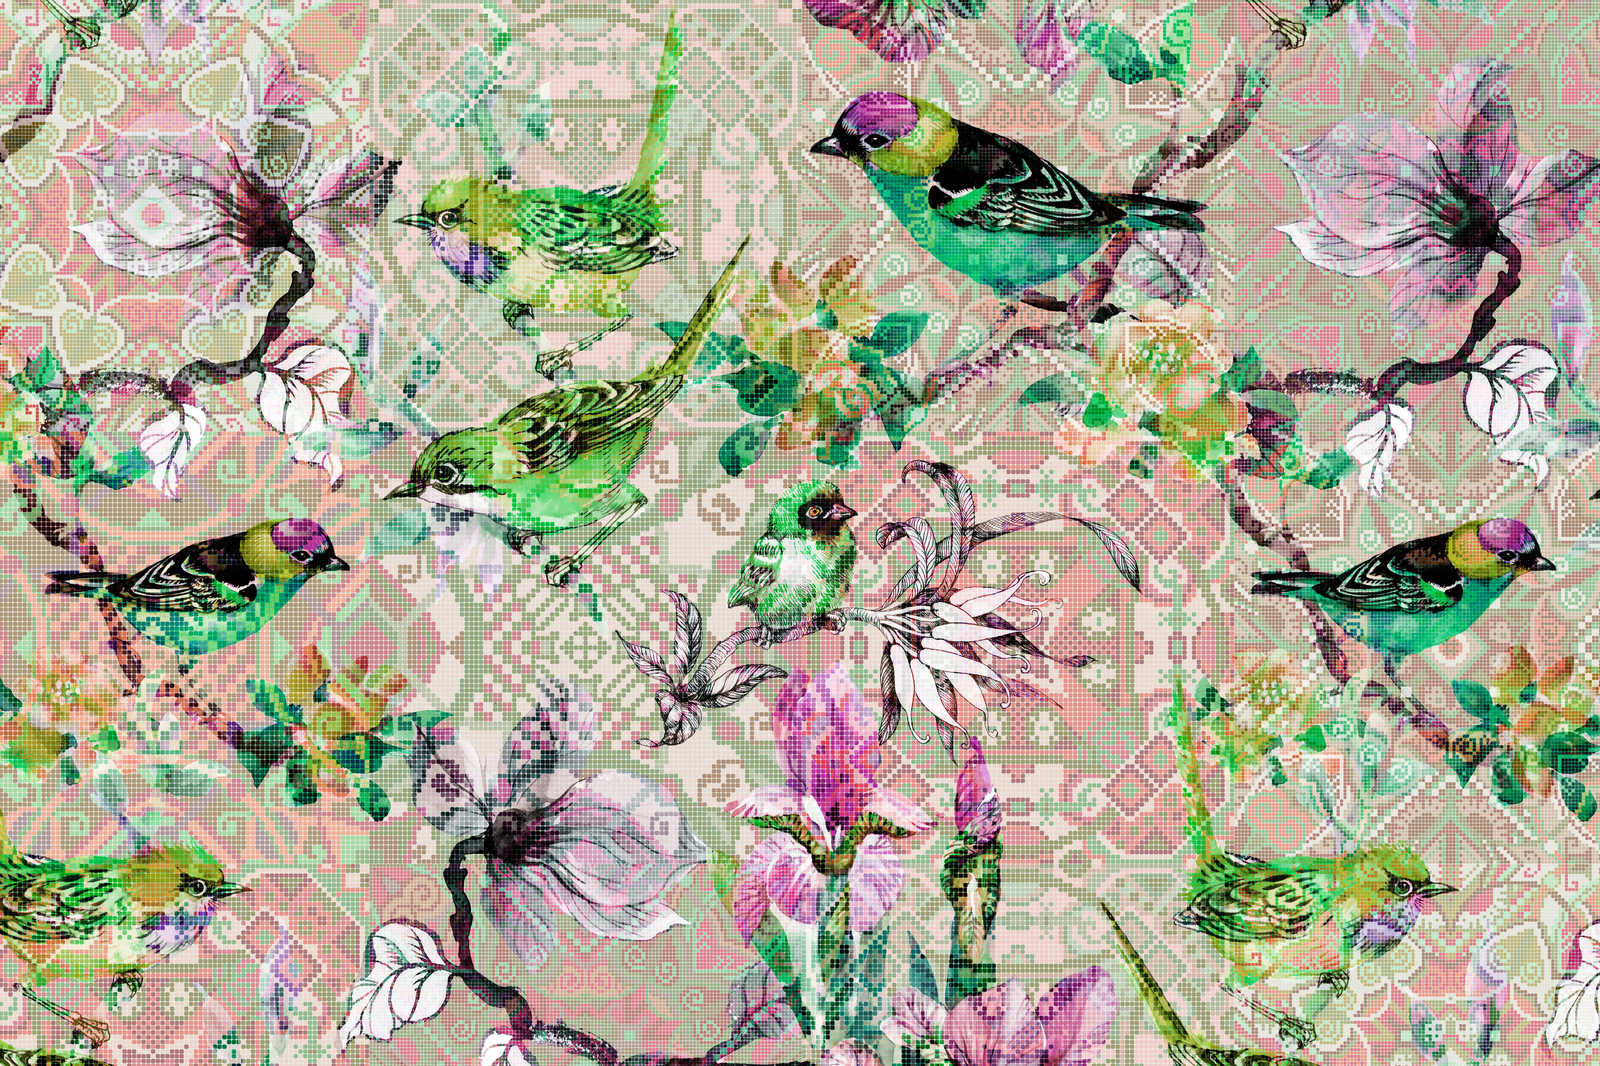             Bird canvas picture with mosaic pattern | mosaic birds 2 - 0,90 m x 0,60 m
        